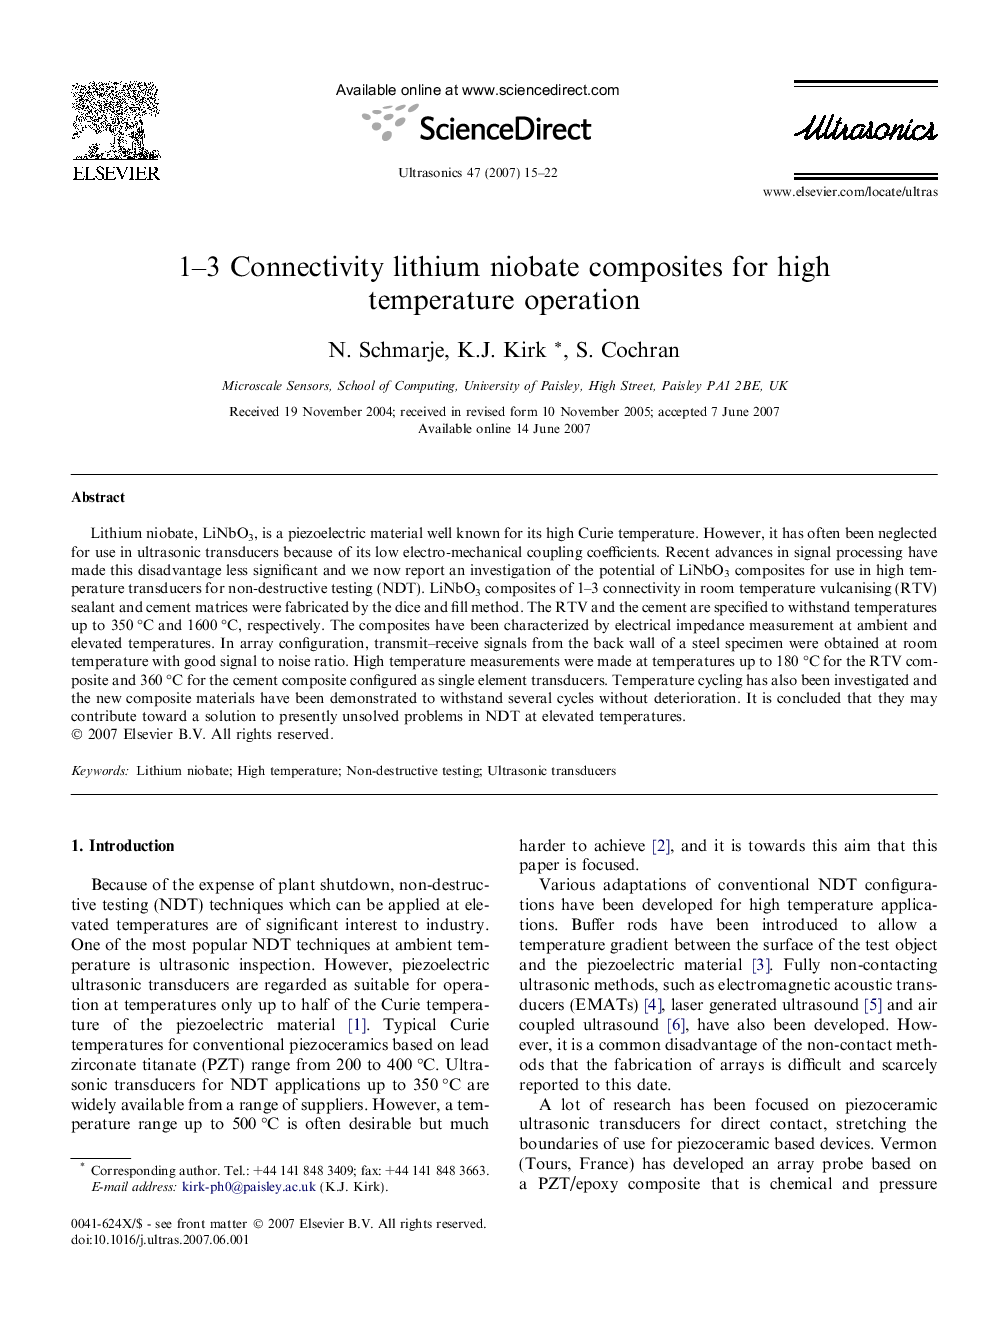 1-3 Connectivity lithium niobate composites for high temperature operation